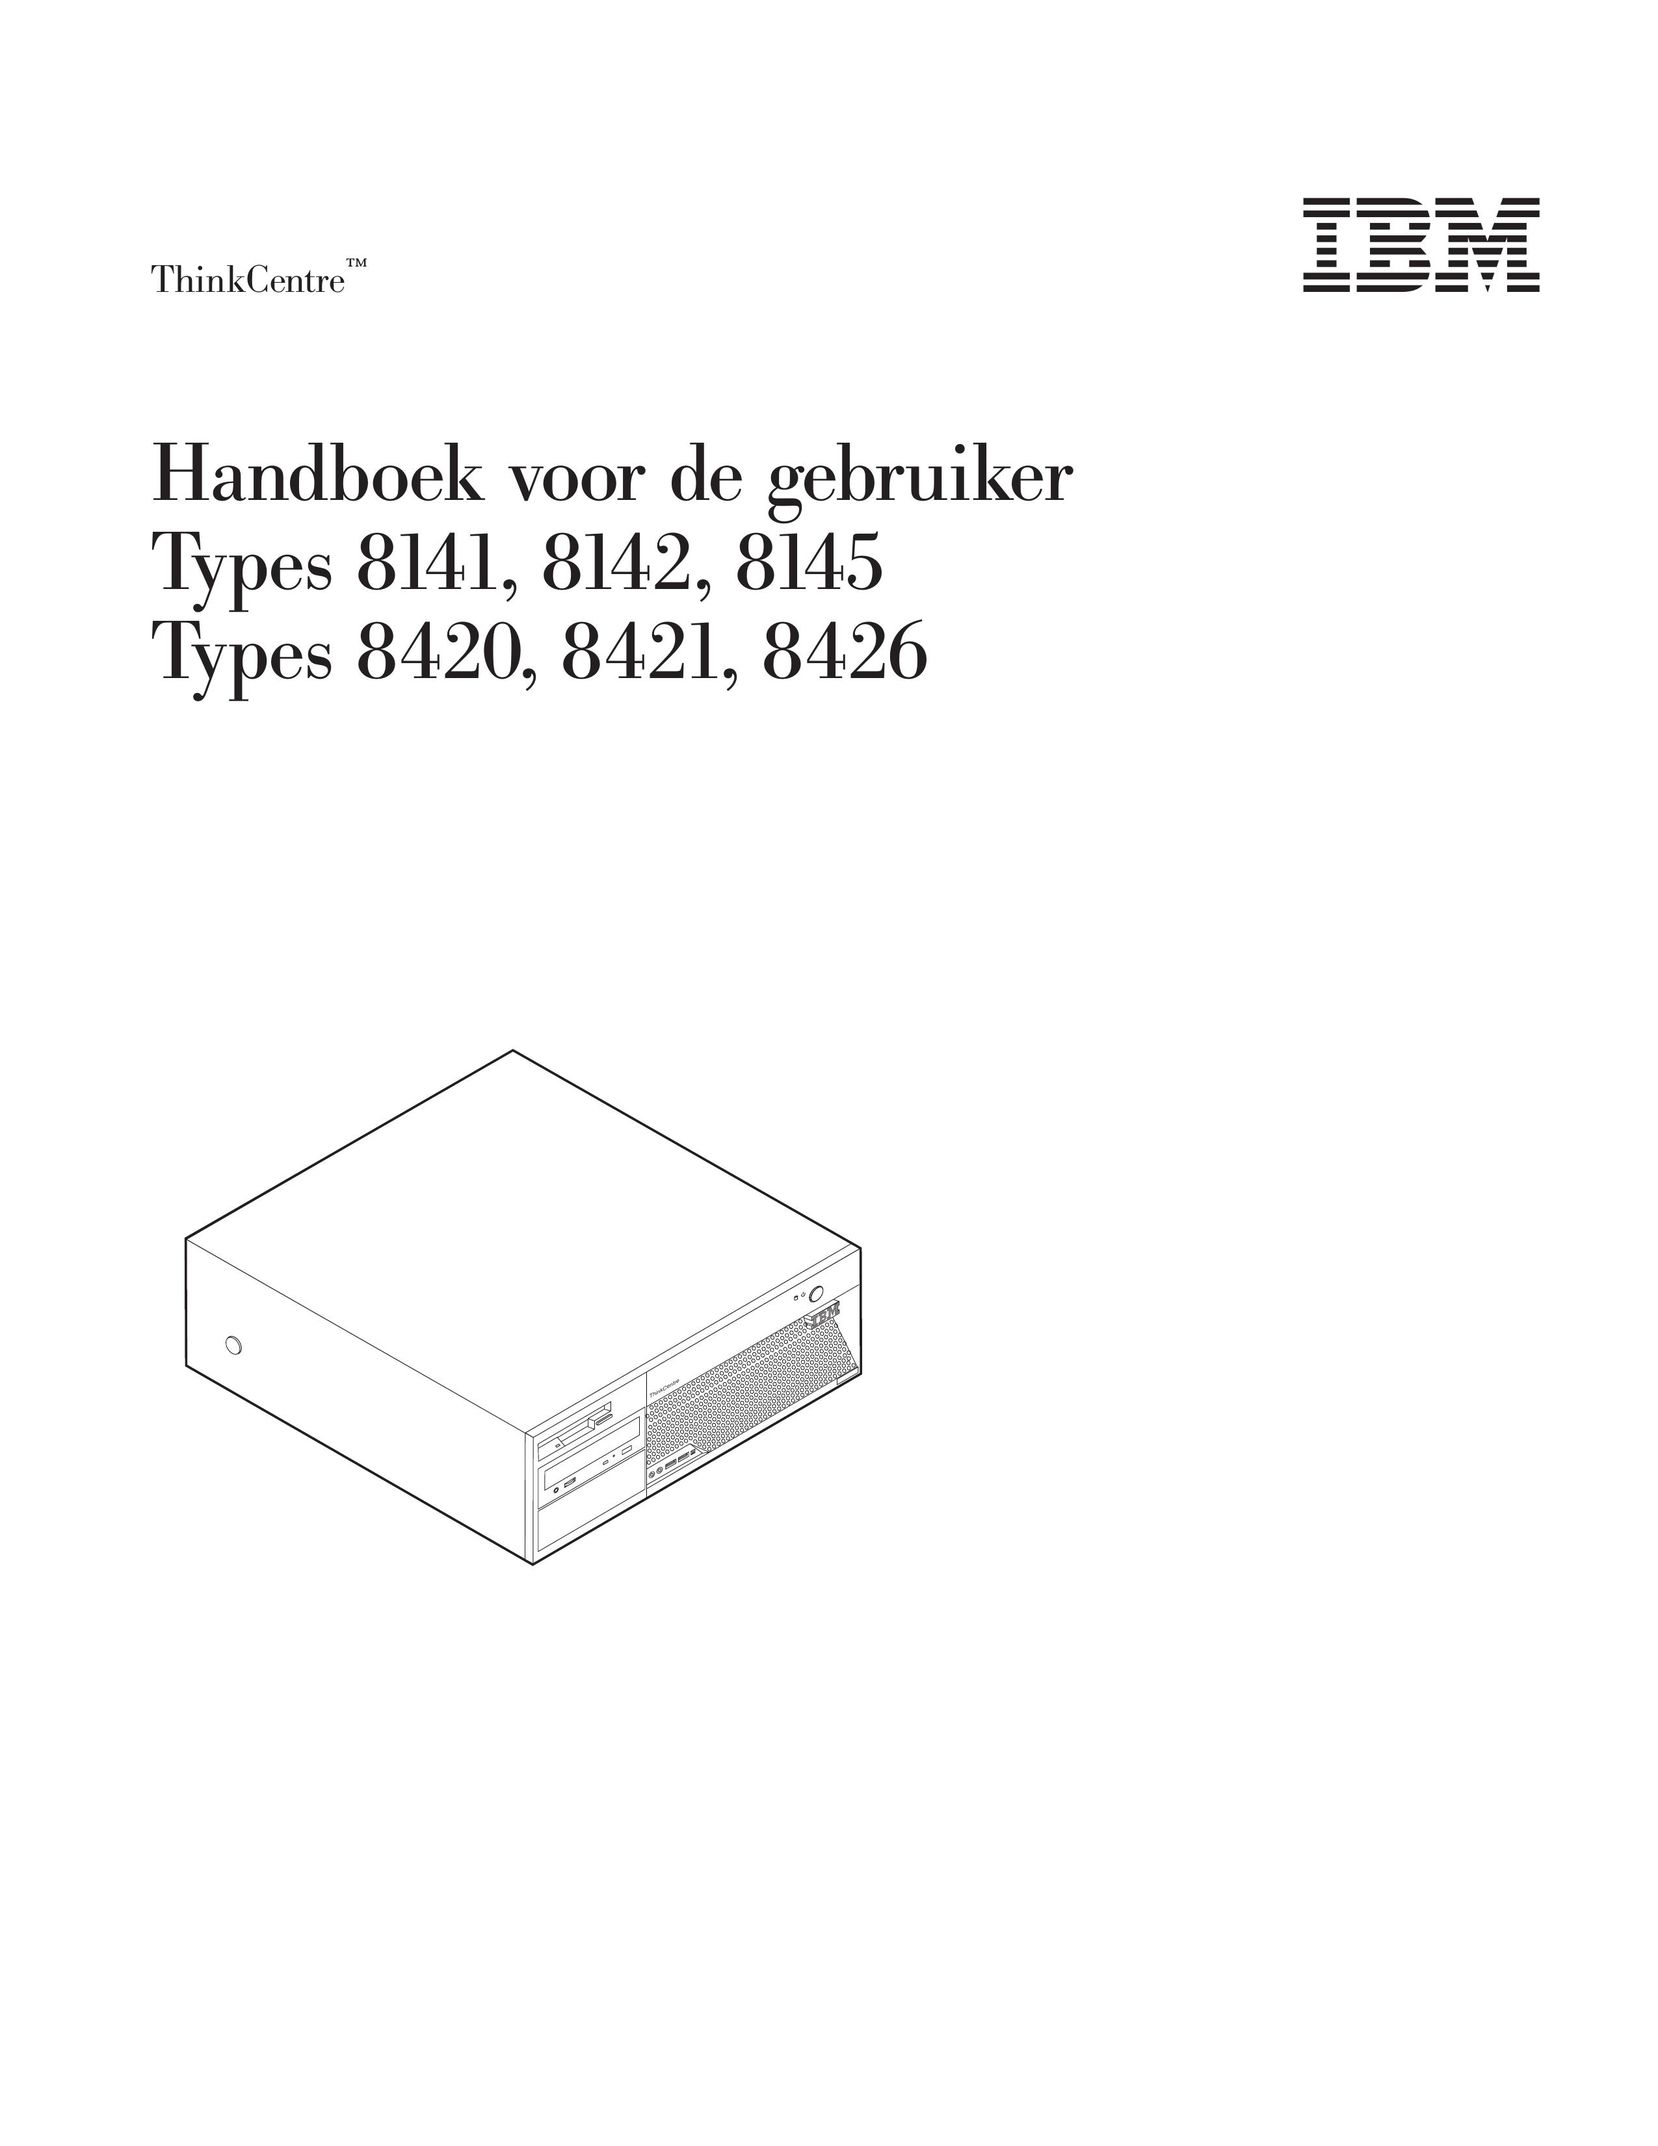 IBM 8142 Conference Phone User Manual